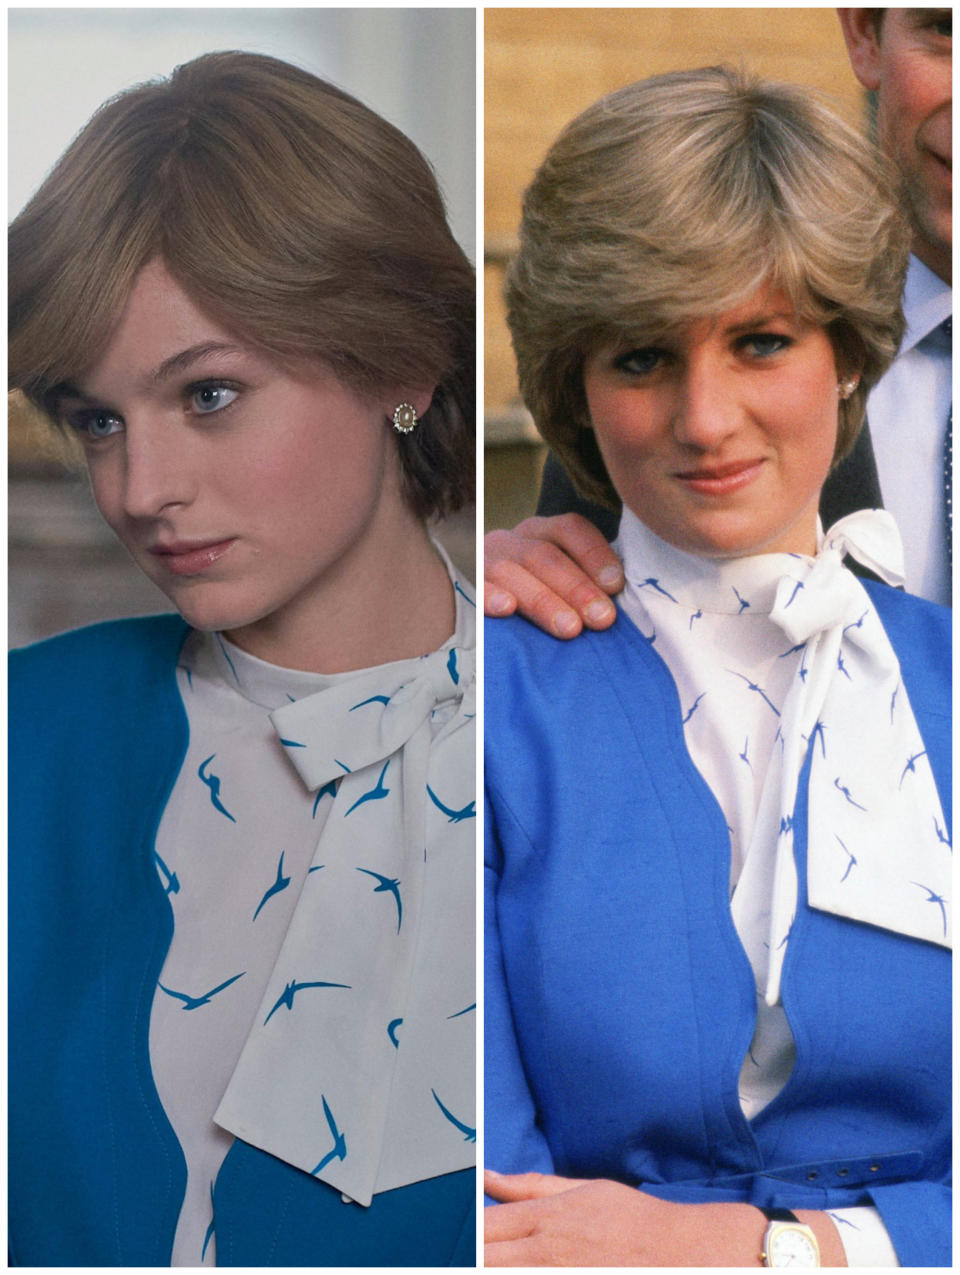 Emma Corrin in Season 4 of "The Crown" vs. the real Princess Diana